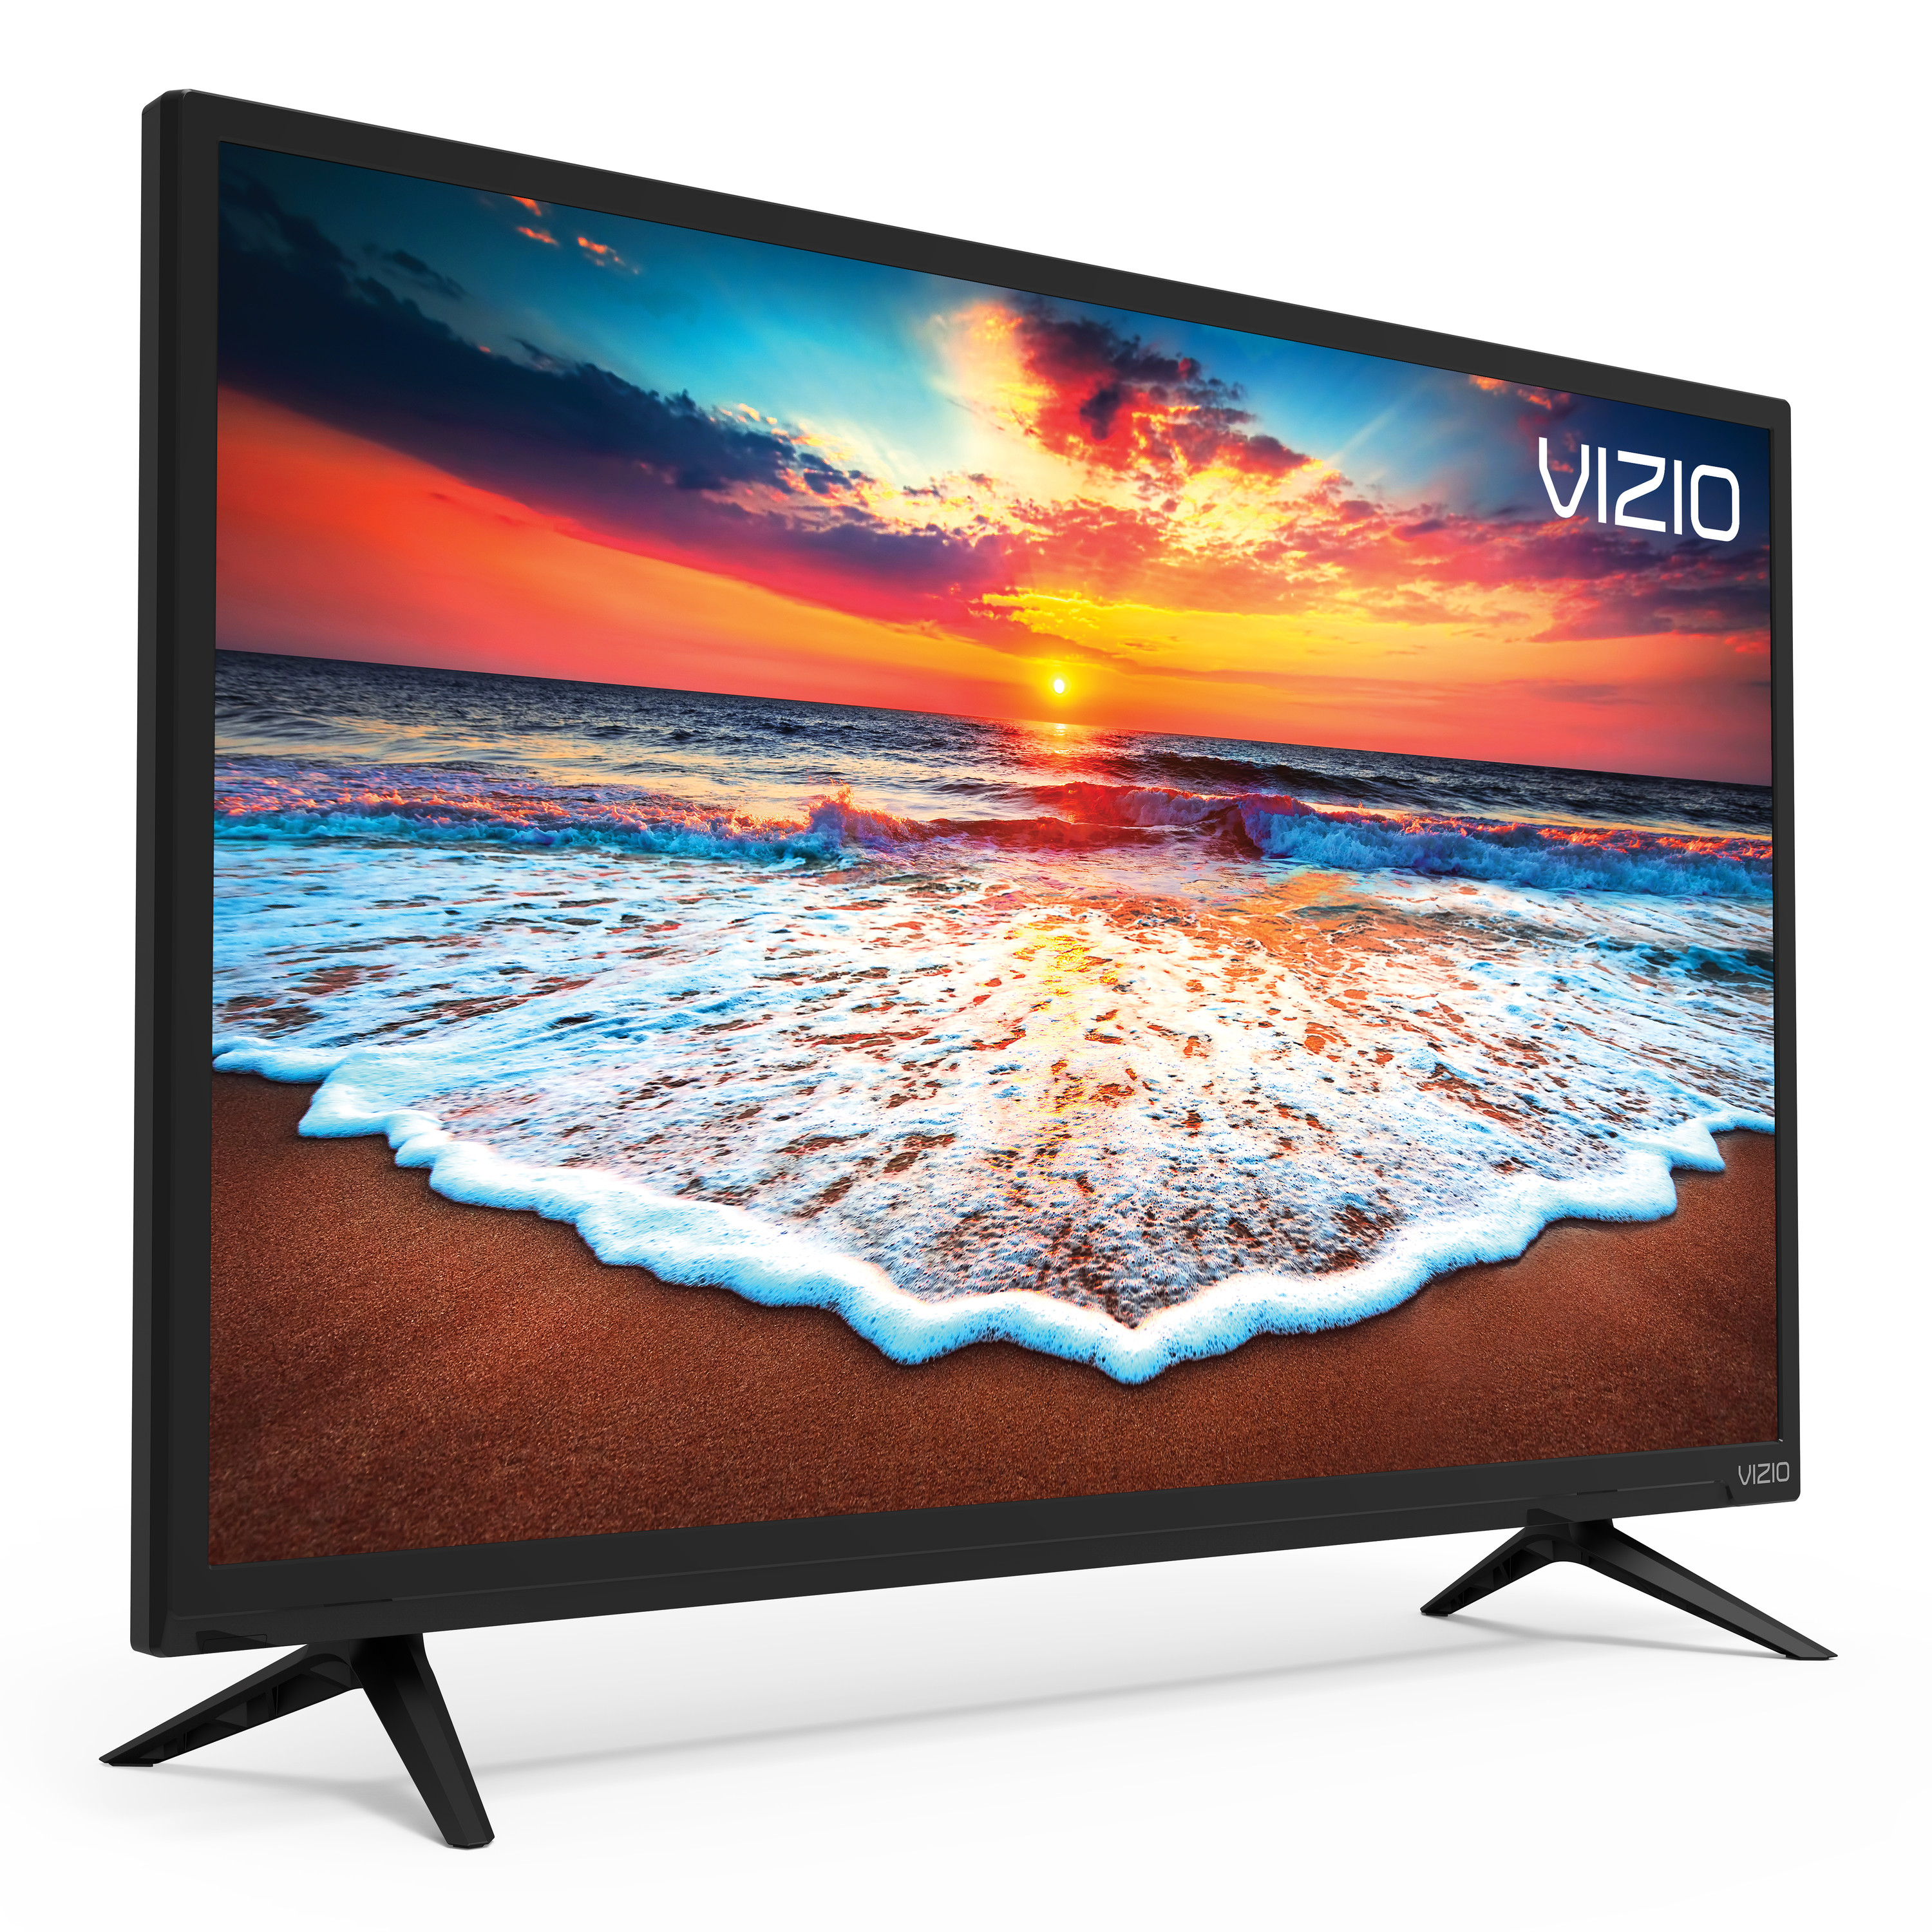 VIZIO 32" Class HD LED Smart TV D-Series D32h-F1 - image 4 of 12